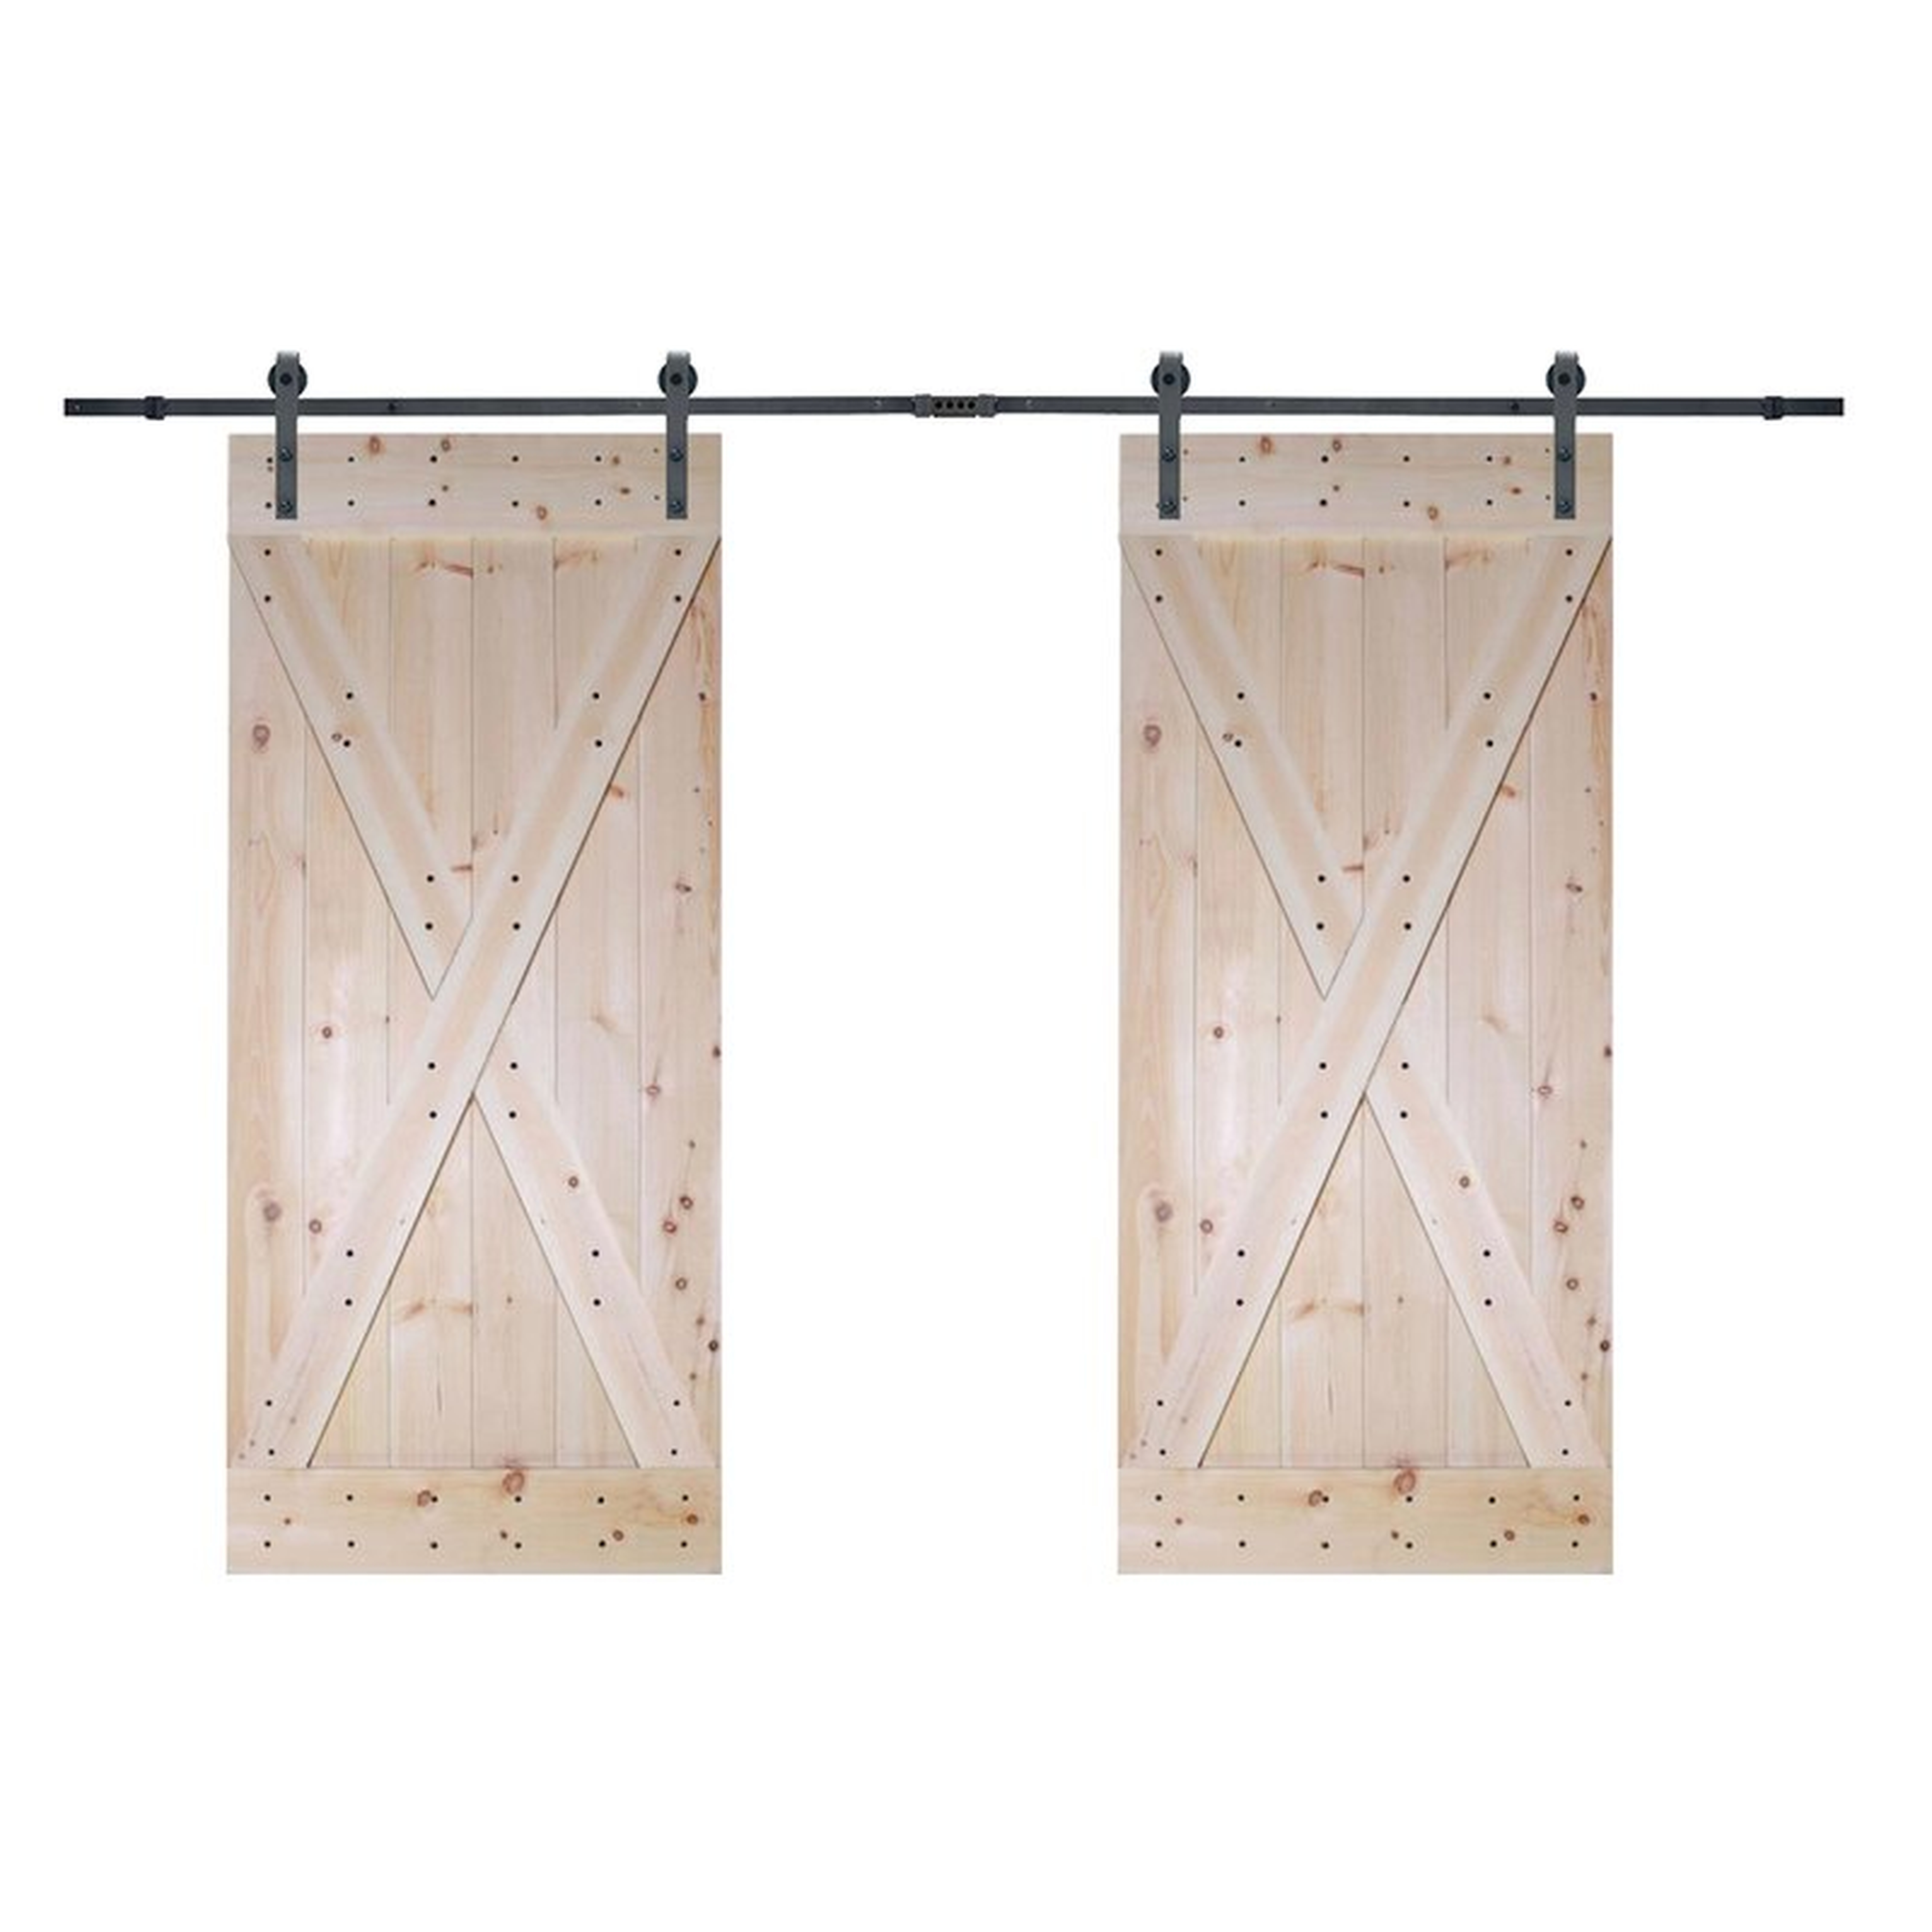 Paneled Wood Unfinished Barn Door with Installation Hardware Kit (Set of 2) - Wayfair